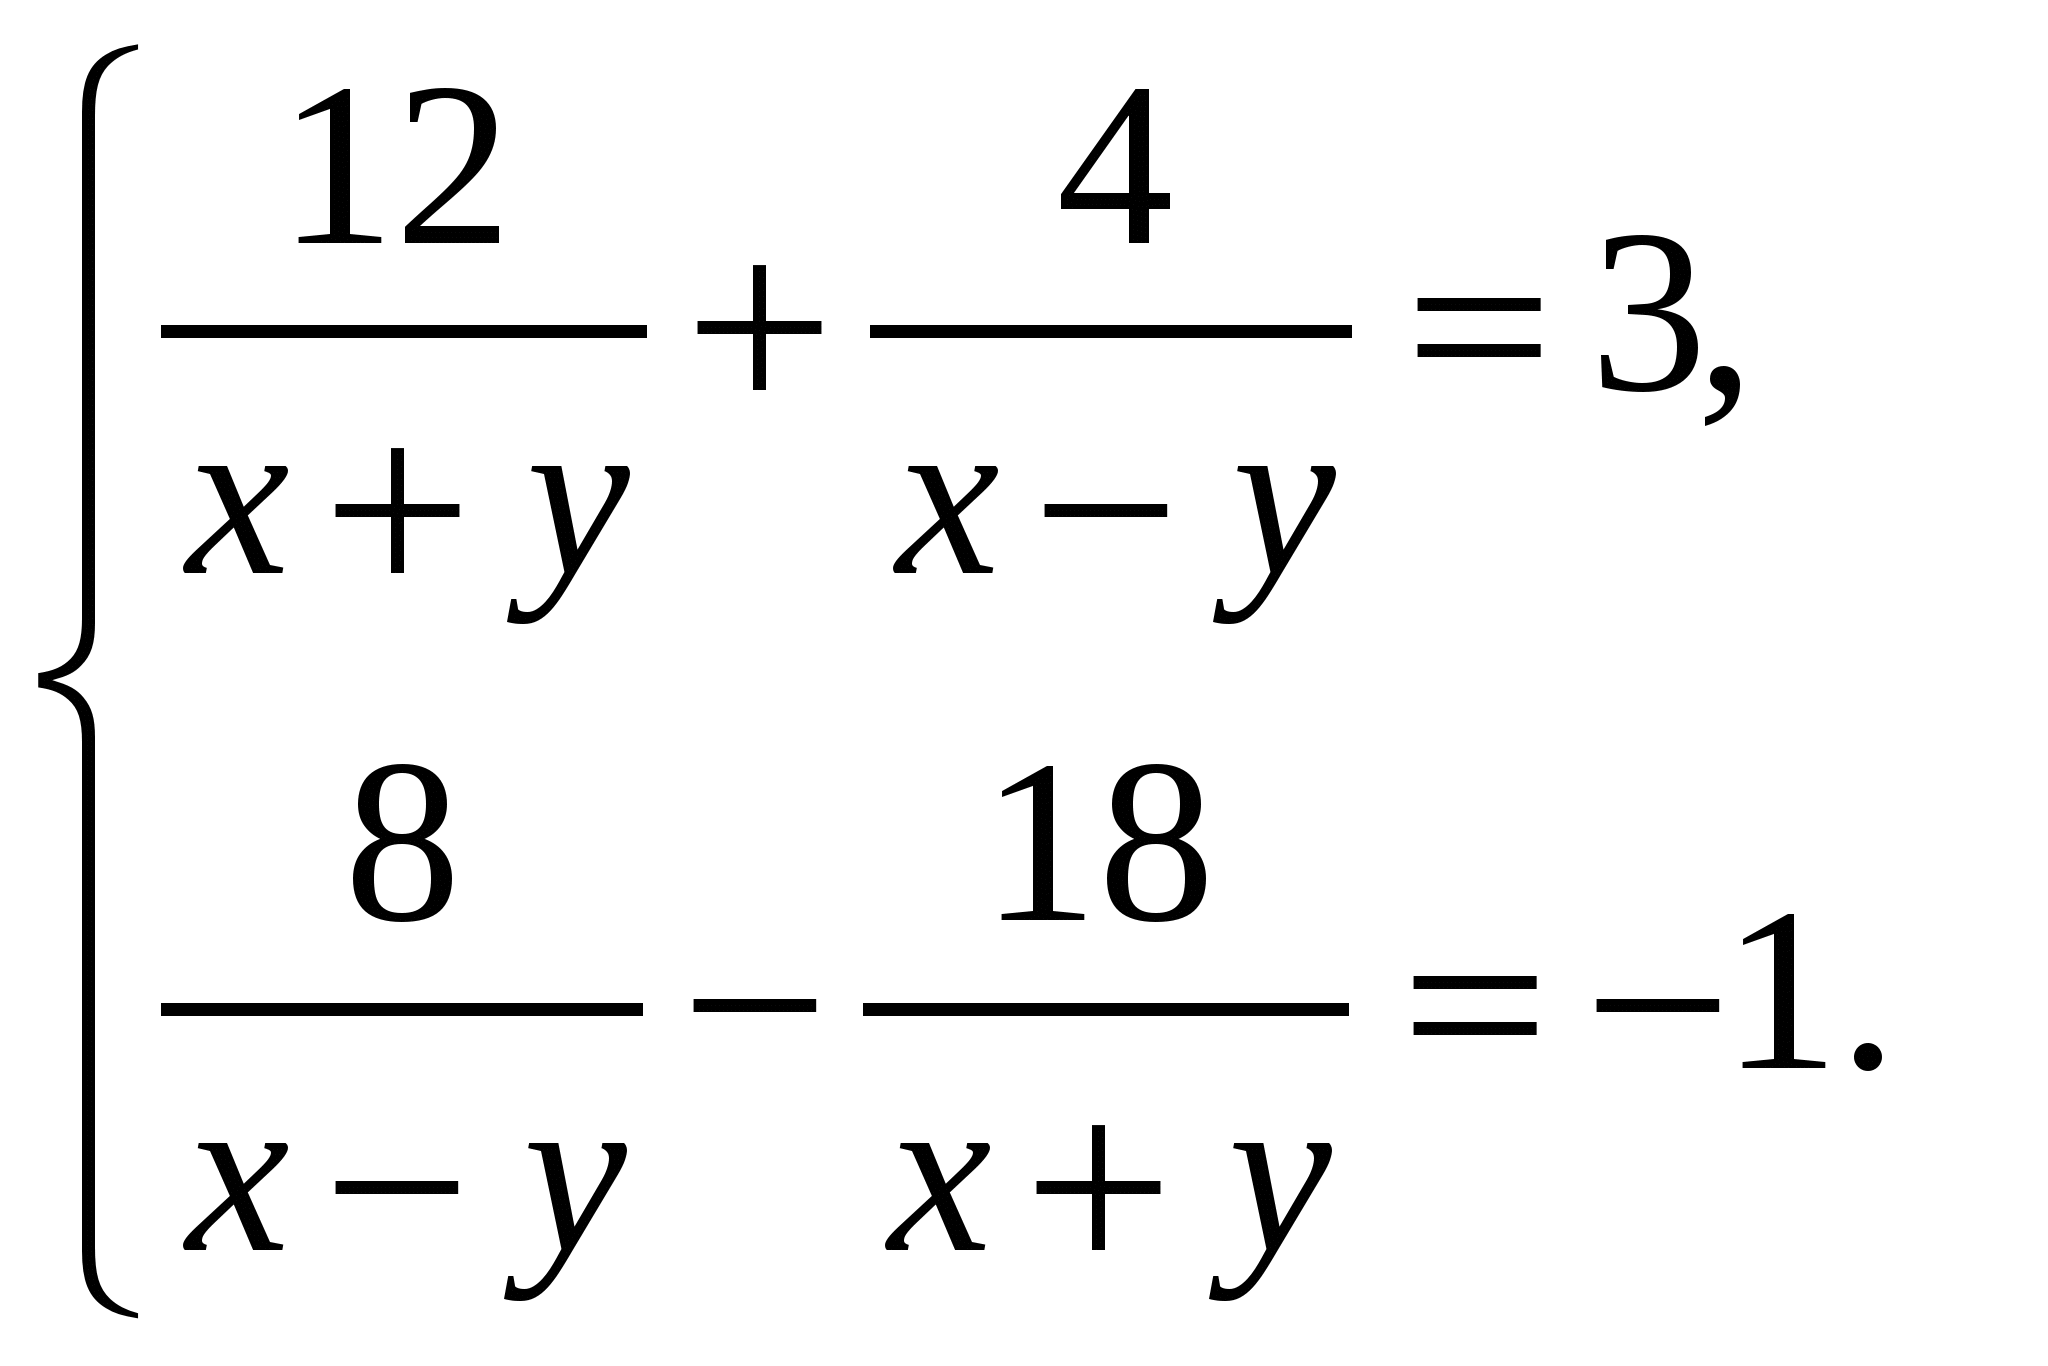 Рабочая программа по алгебре 9 класс (учебник Мордкович А.Г.)